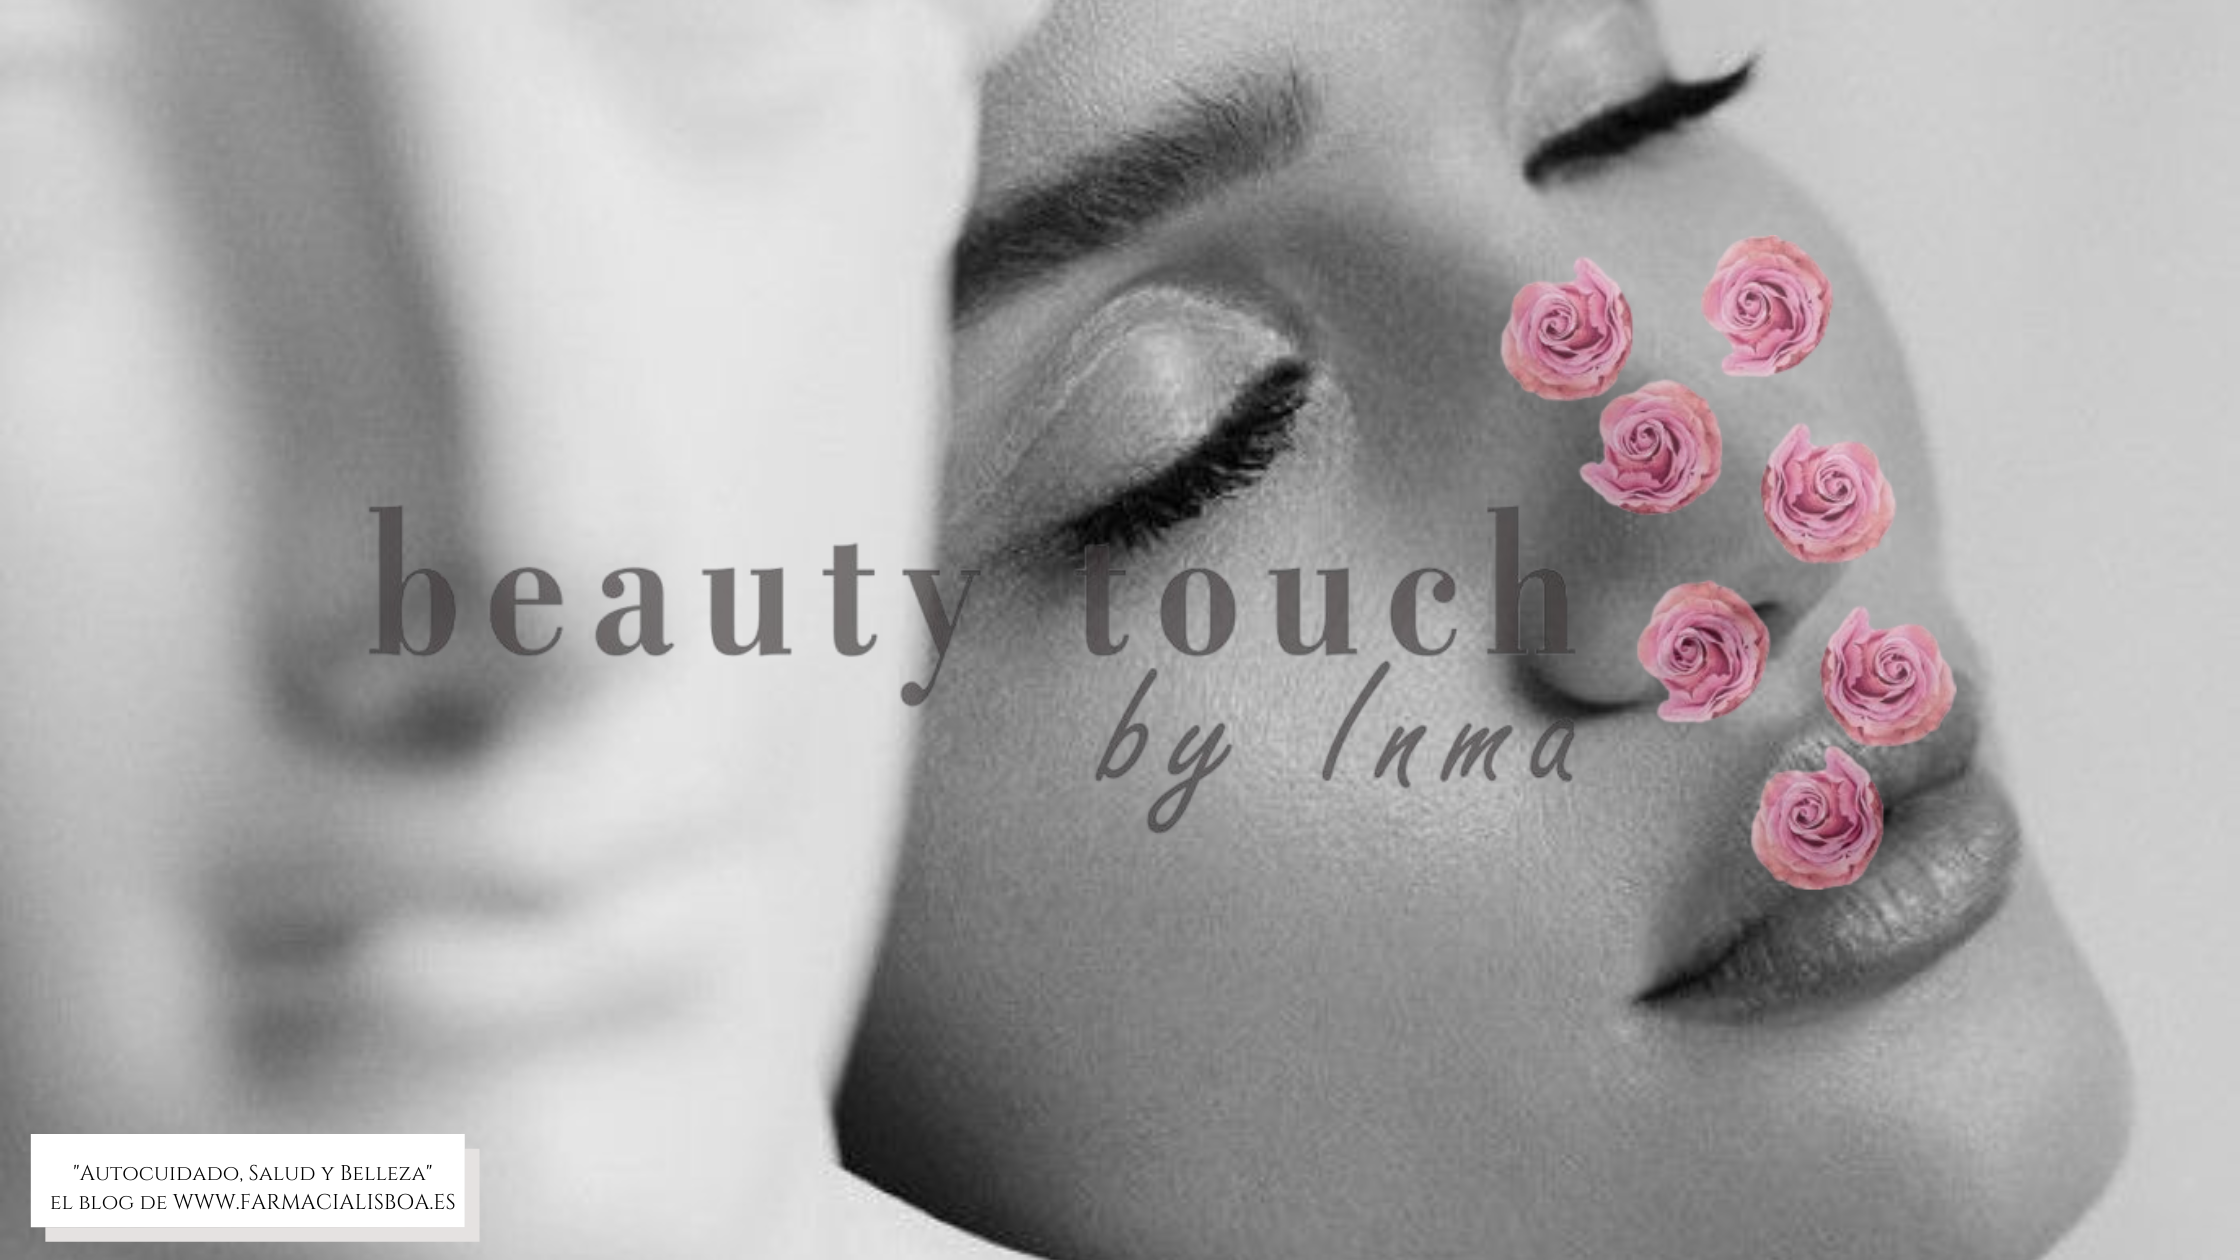 Clínica de medicina estética "beauty touch by Inma"